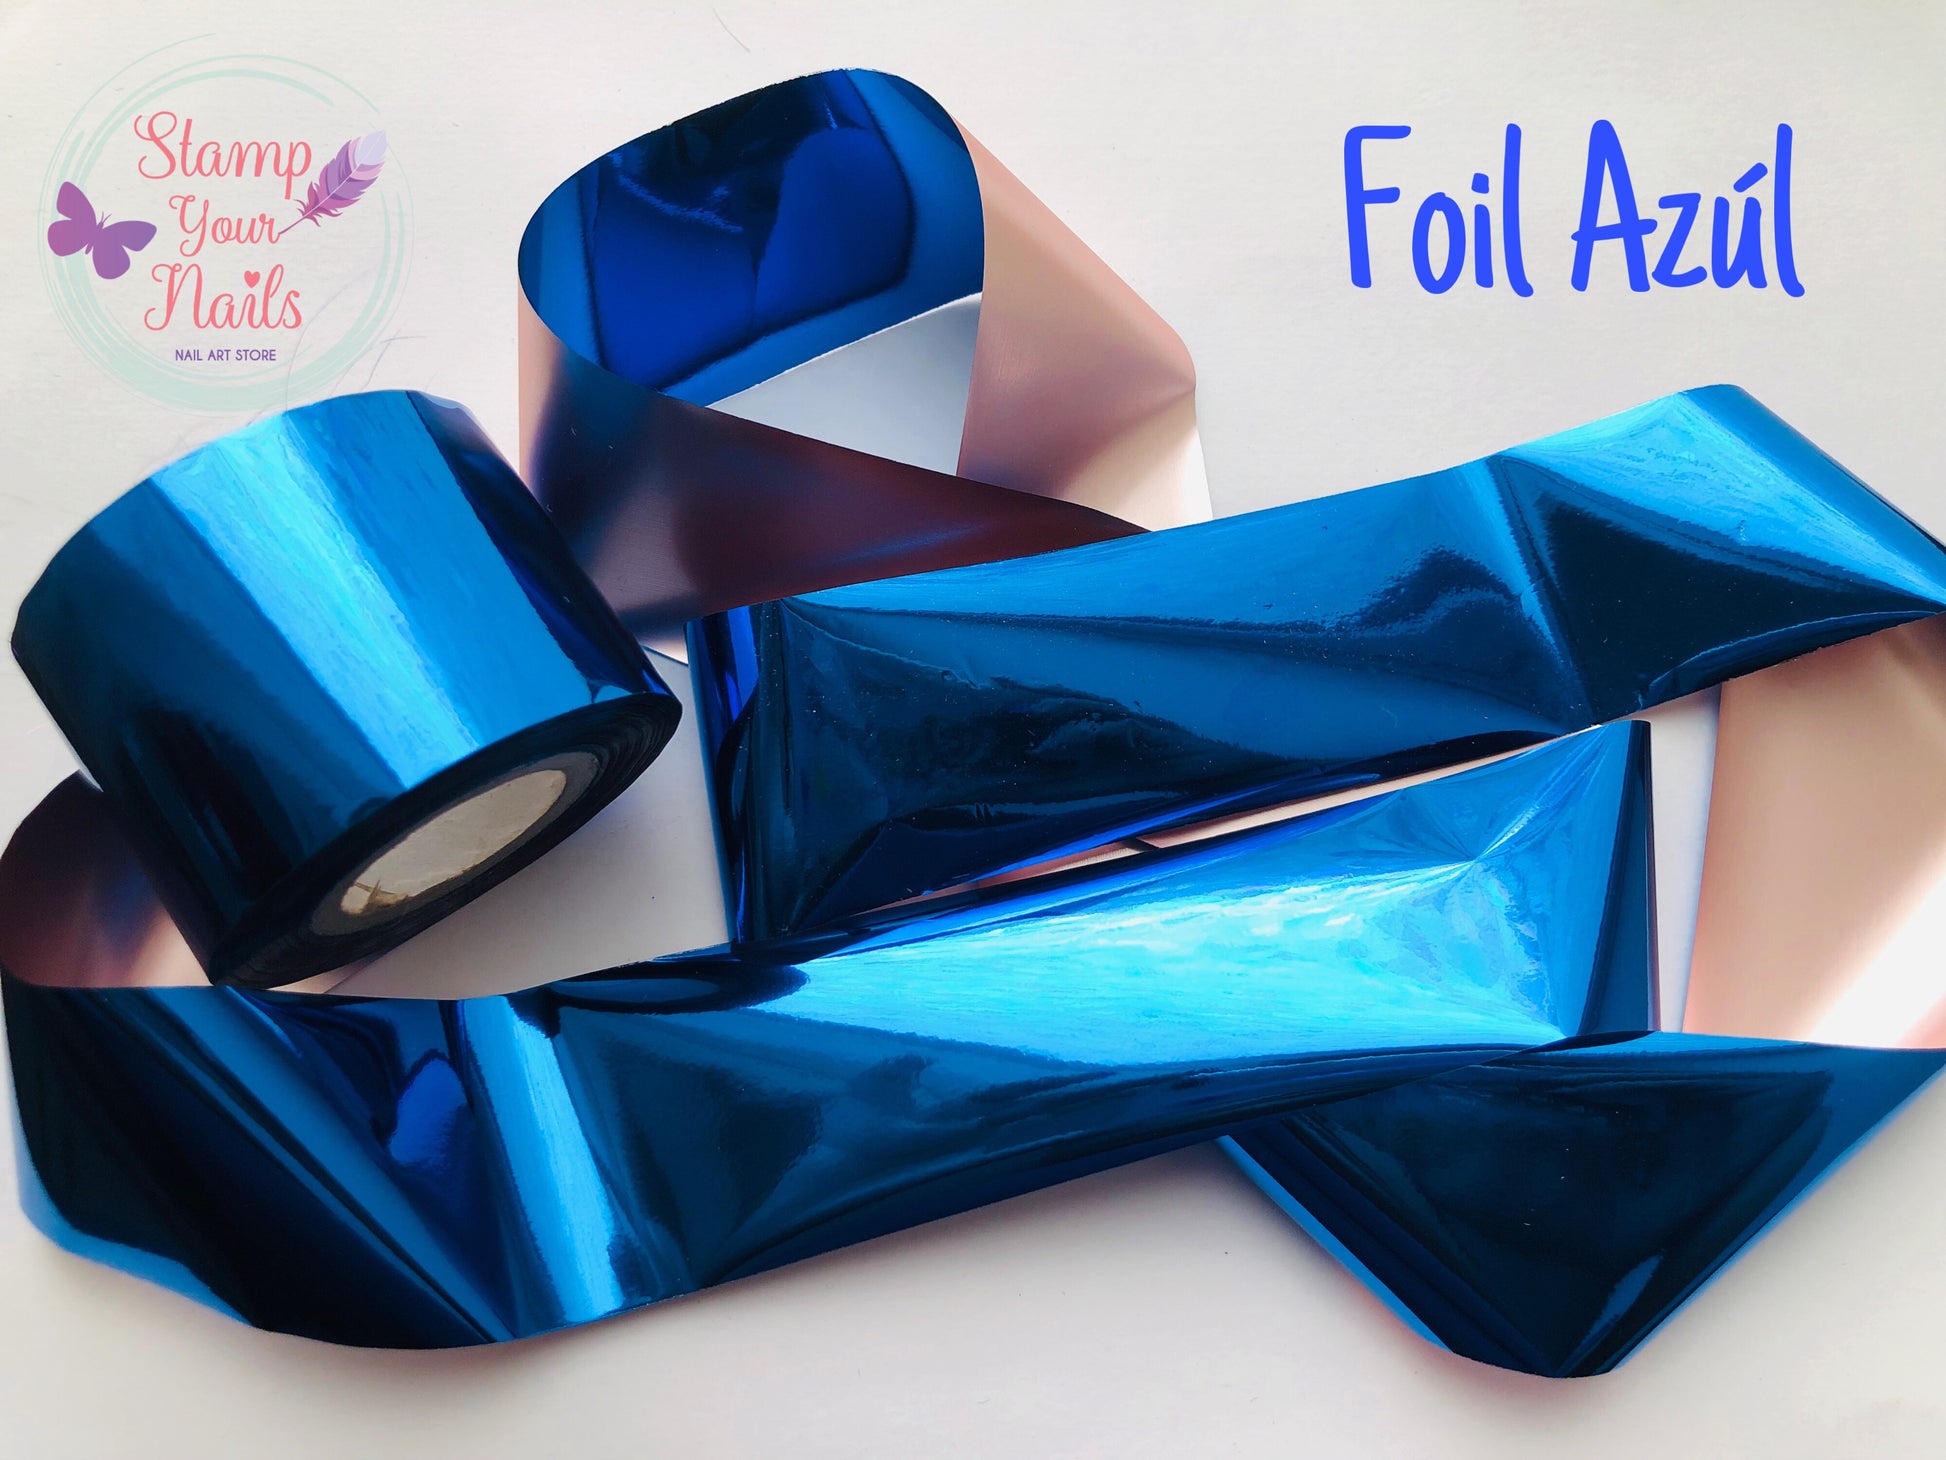 Foil Azúl - Stamp your nails